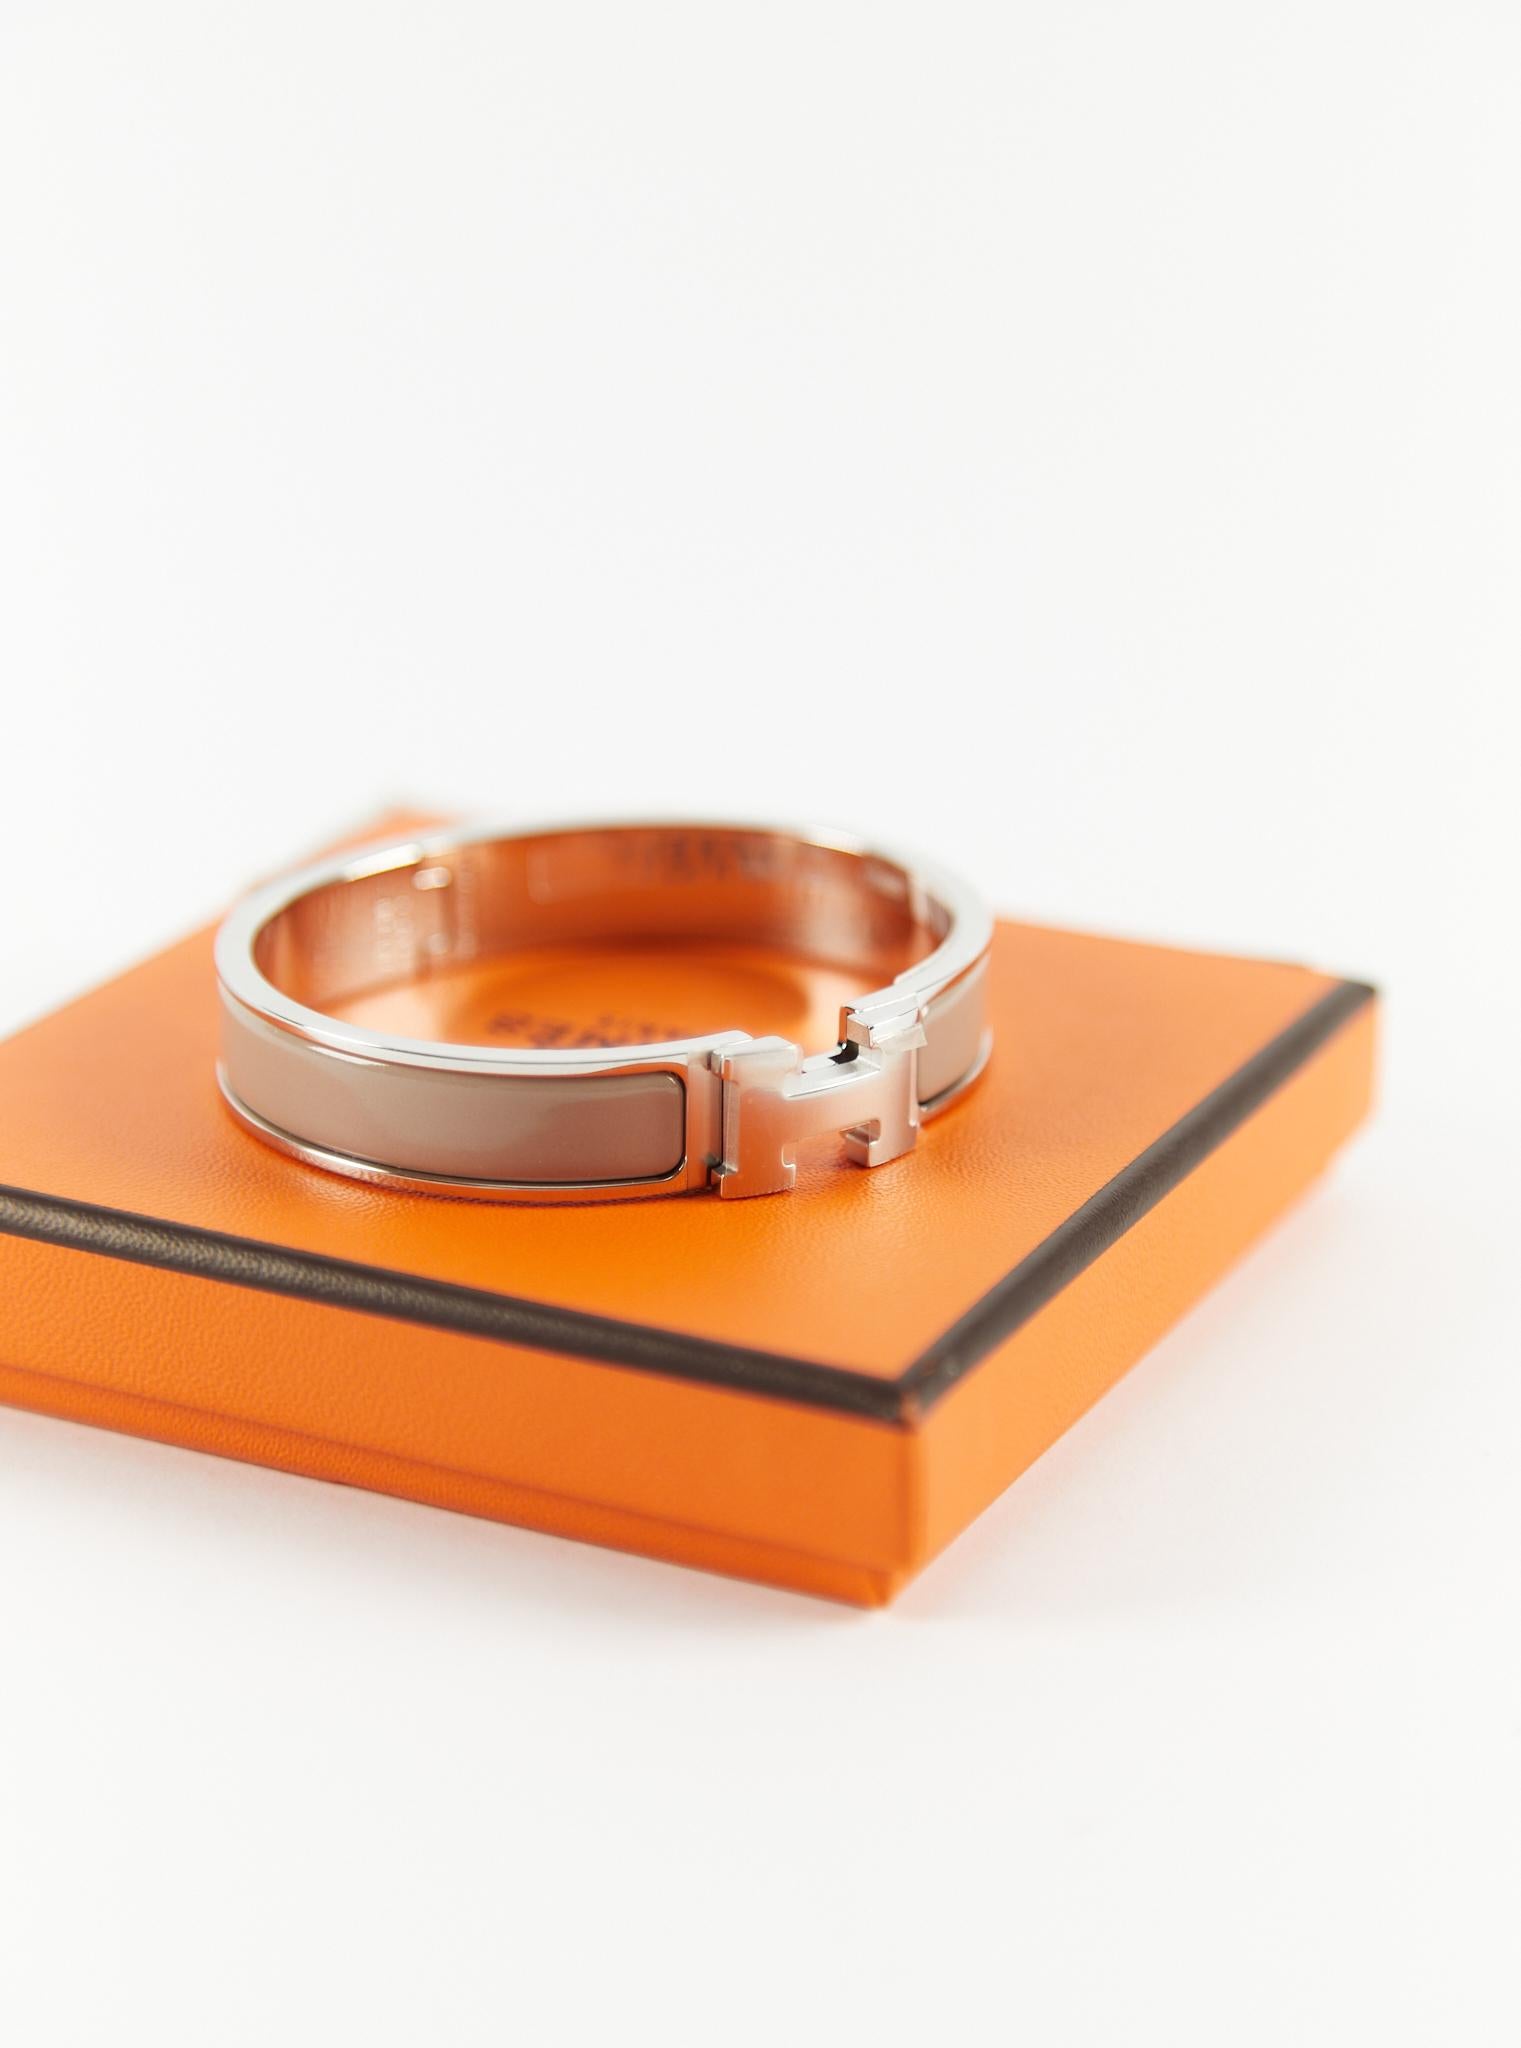 Hermès  Clic H GM Bracelet in Marron Glace & Palladium

Wrist size: 16.8 cm  Width: 8 mm

Made in France

